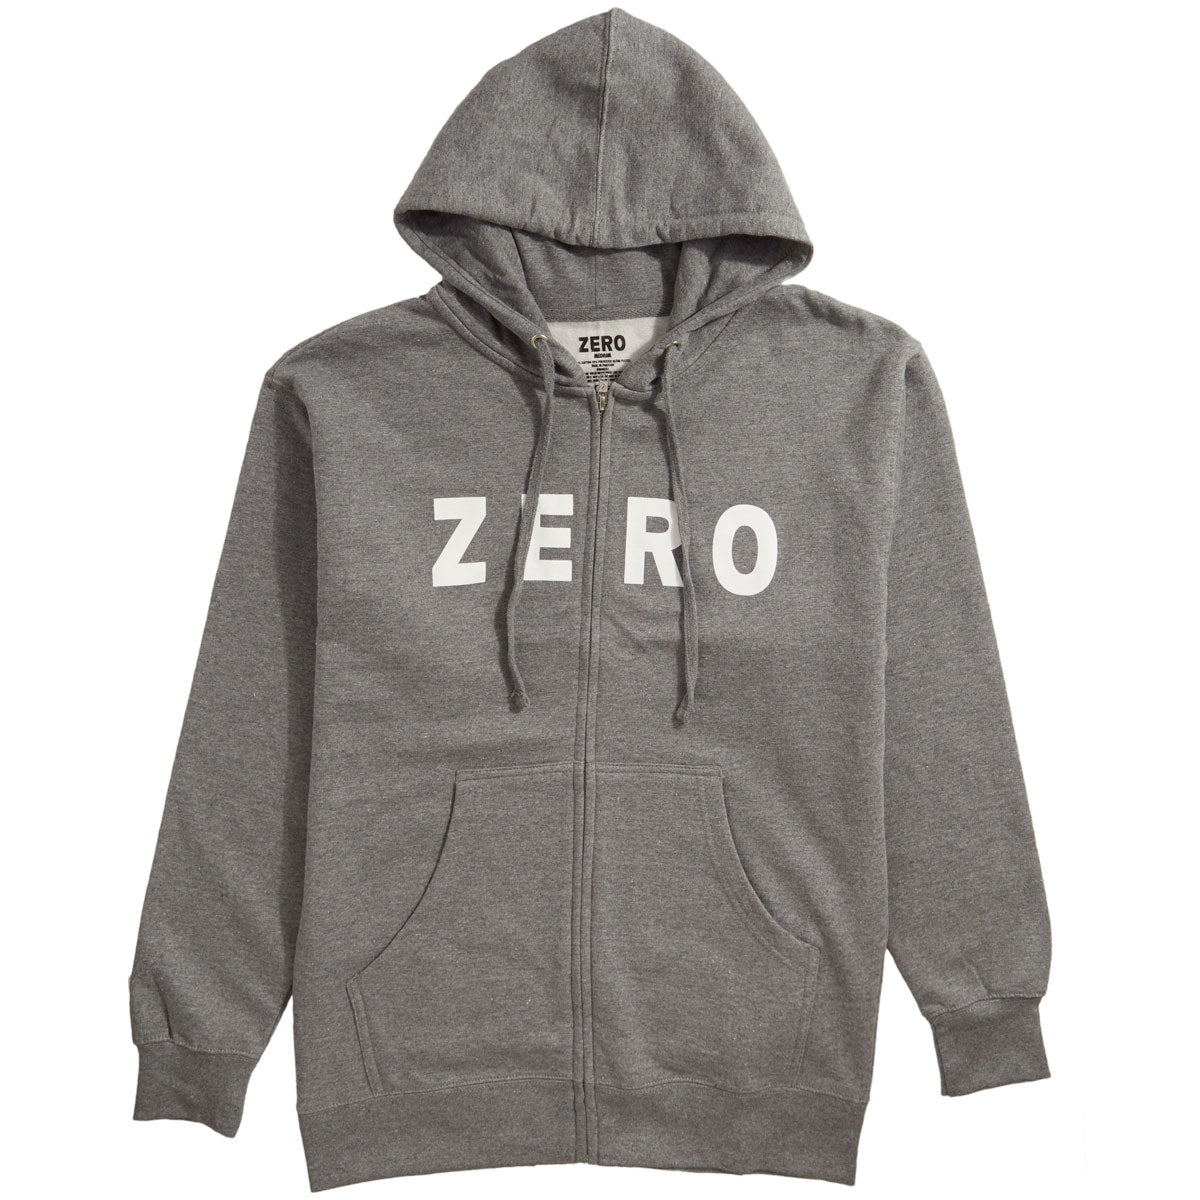 Zero Army Zip Hoodie - Grey image 1